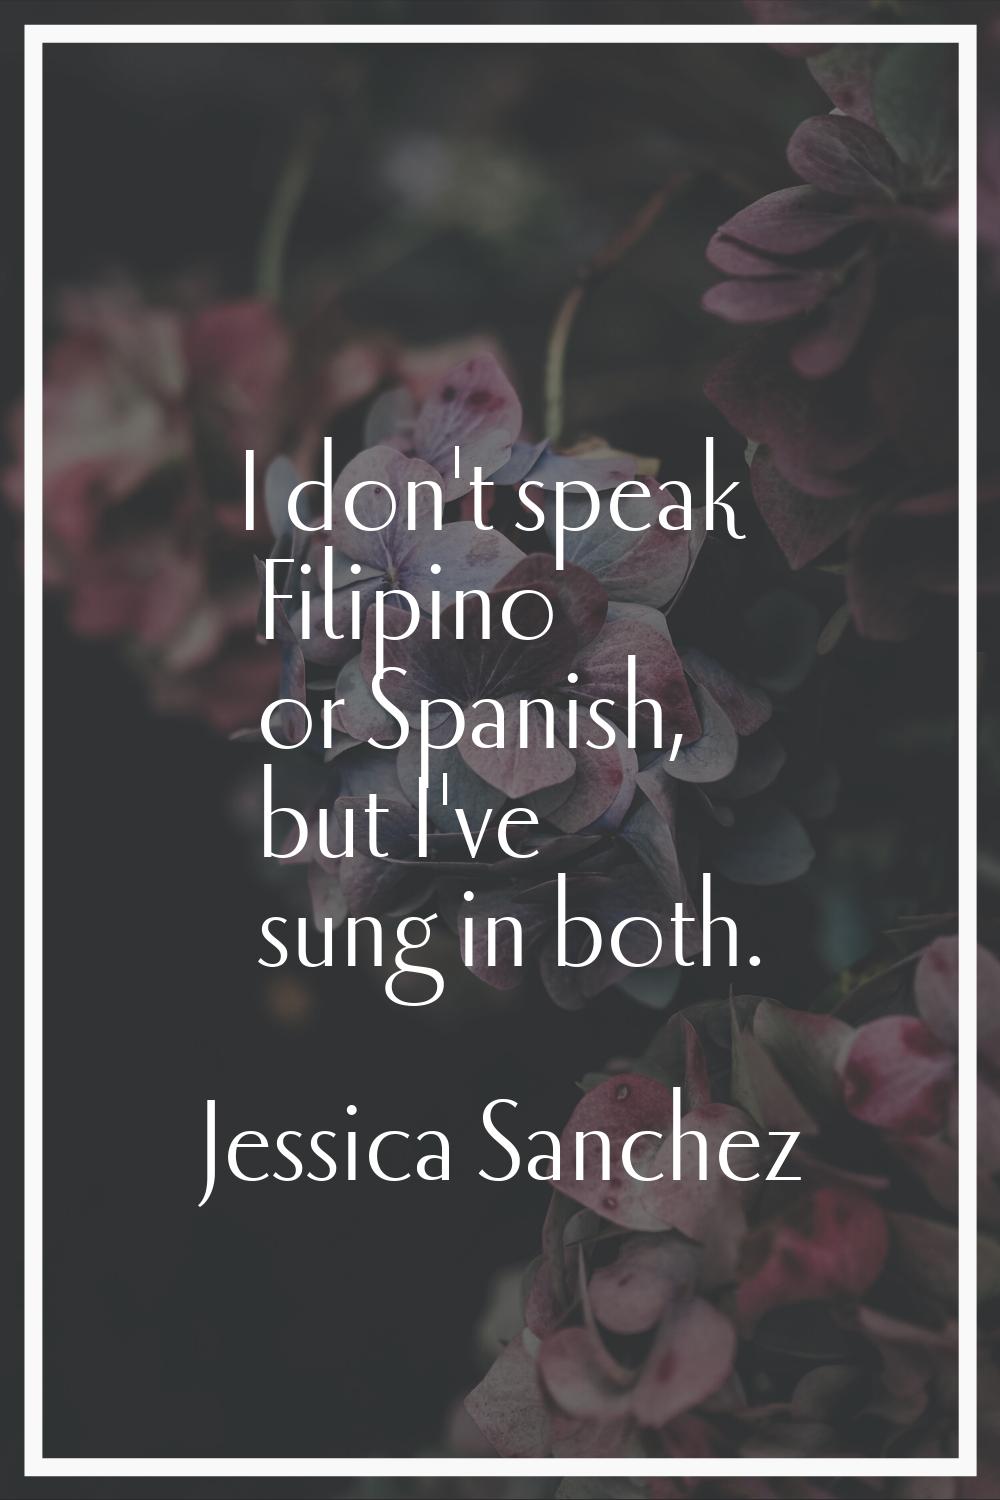 I don't speak Filipino or Spanish, but I've sung in both.